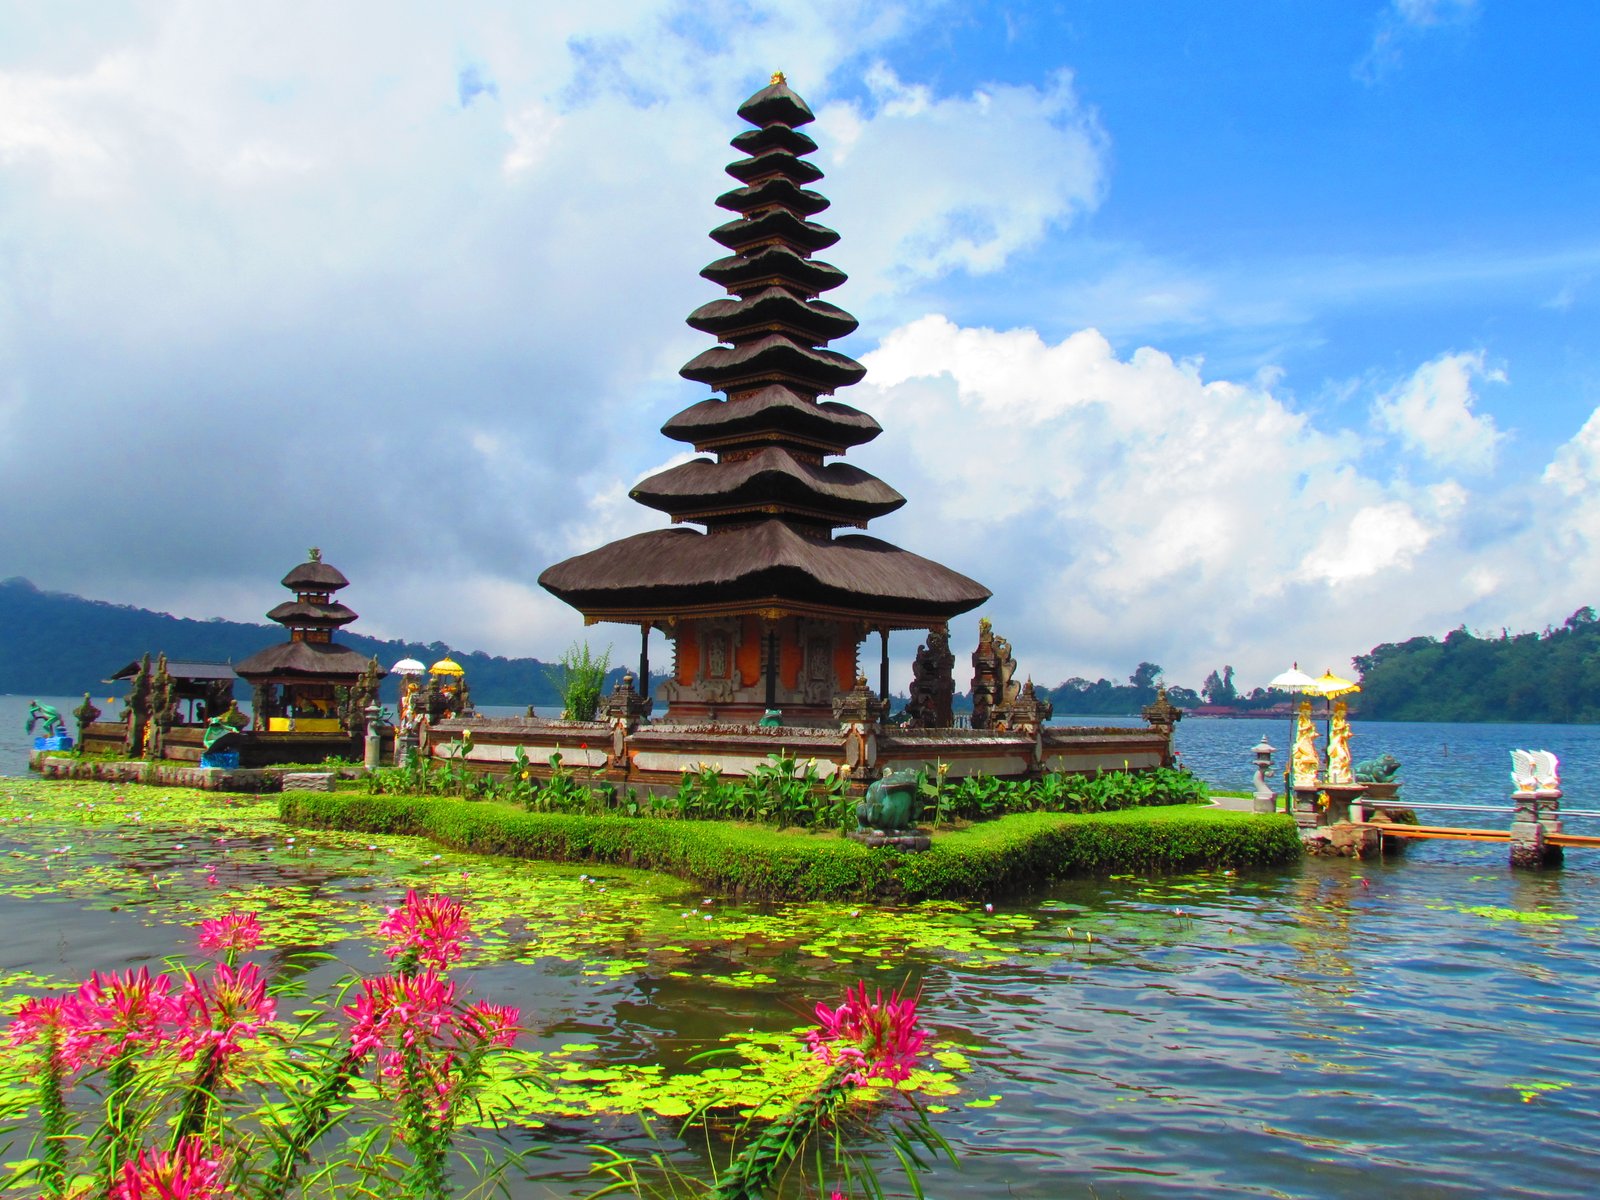 http://www.maribalitours.com/wp-content/uploads/2015/04/Ulun-Danu-Temple-at-Beautiful-stunning-look-at-Beratan-lake-side-in-Bedugul-highland-Bali-island-Indonesia-Mari-Bali-Tours-90.jpg